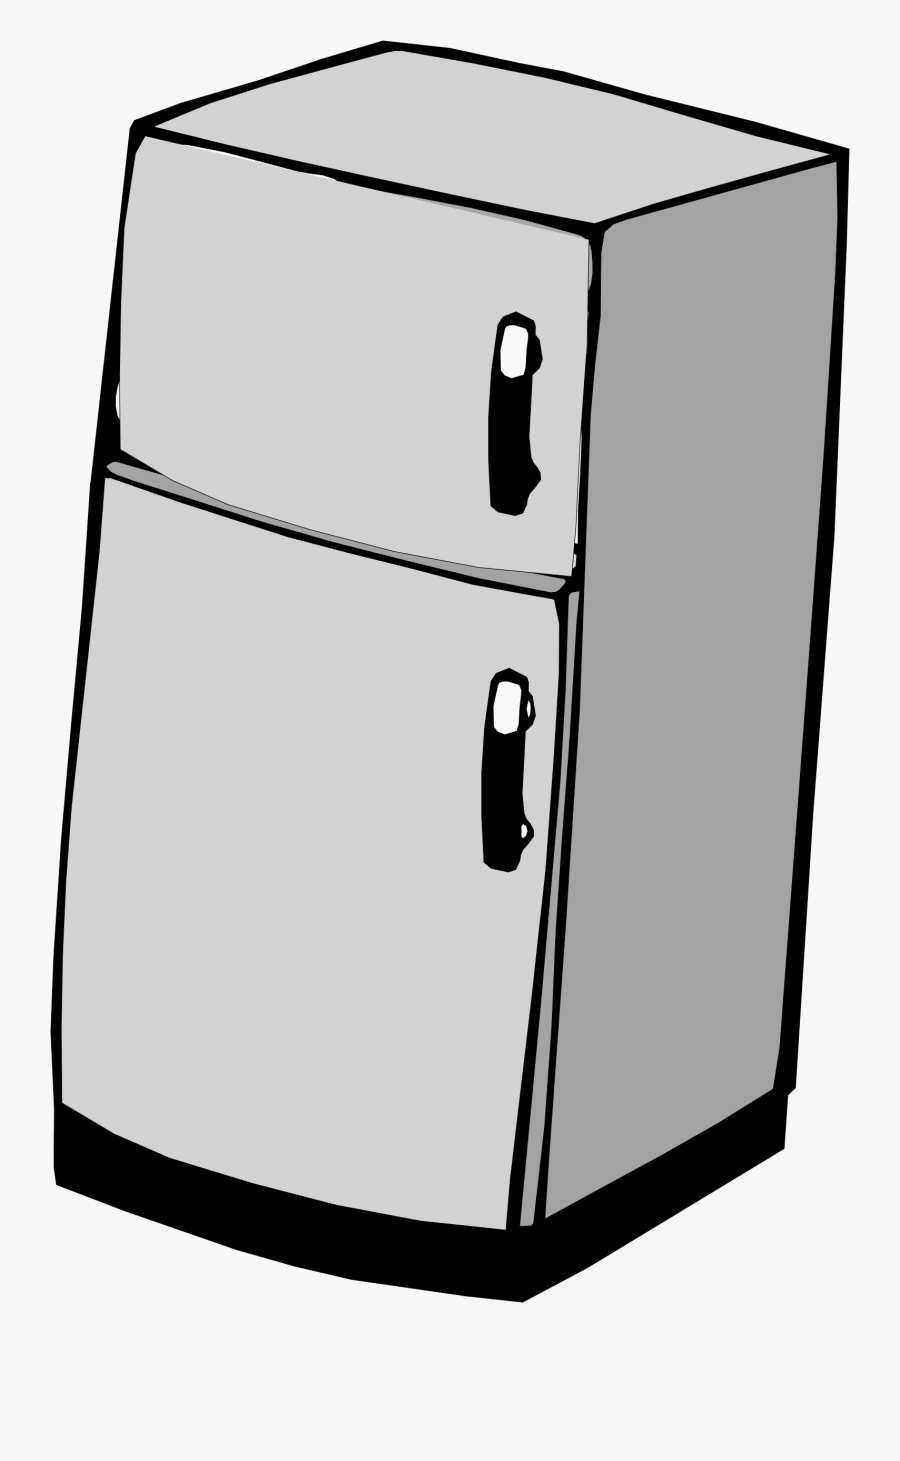 Refrigerator Clipart Refrigeration - Refrigerator Clipart, Transparent Clipart